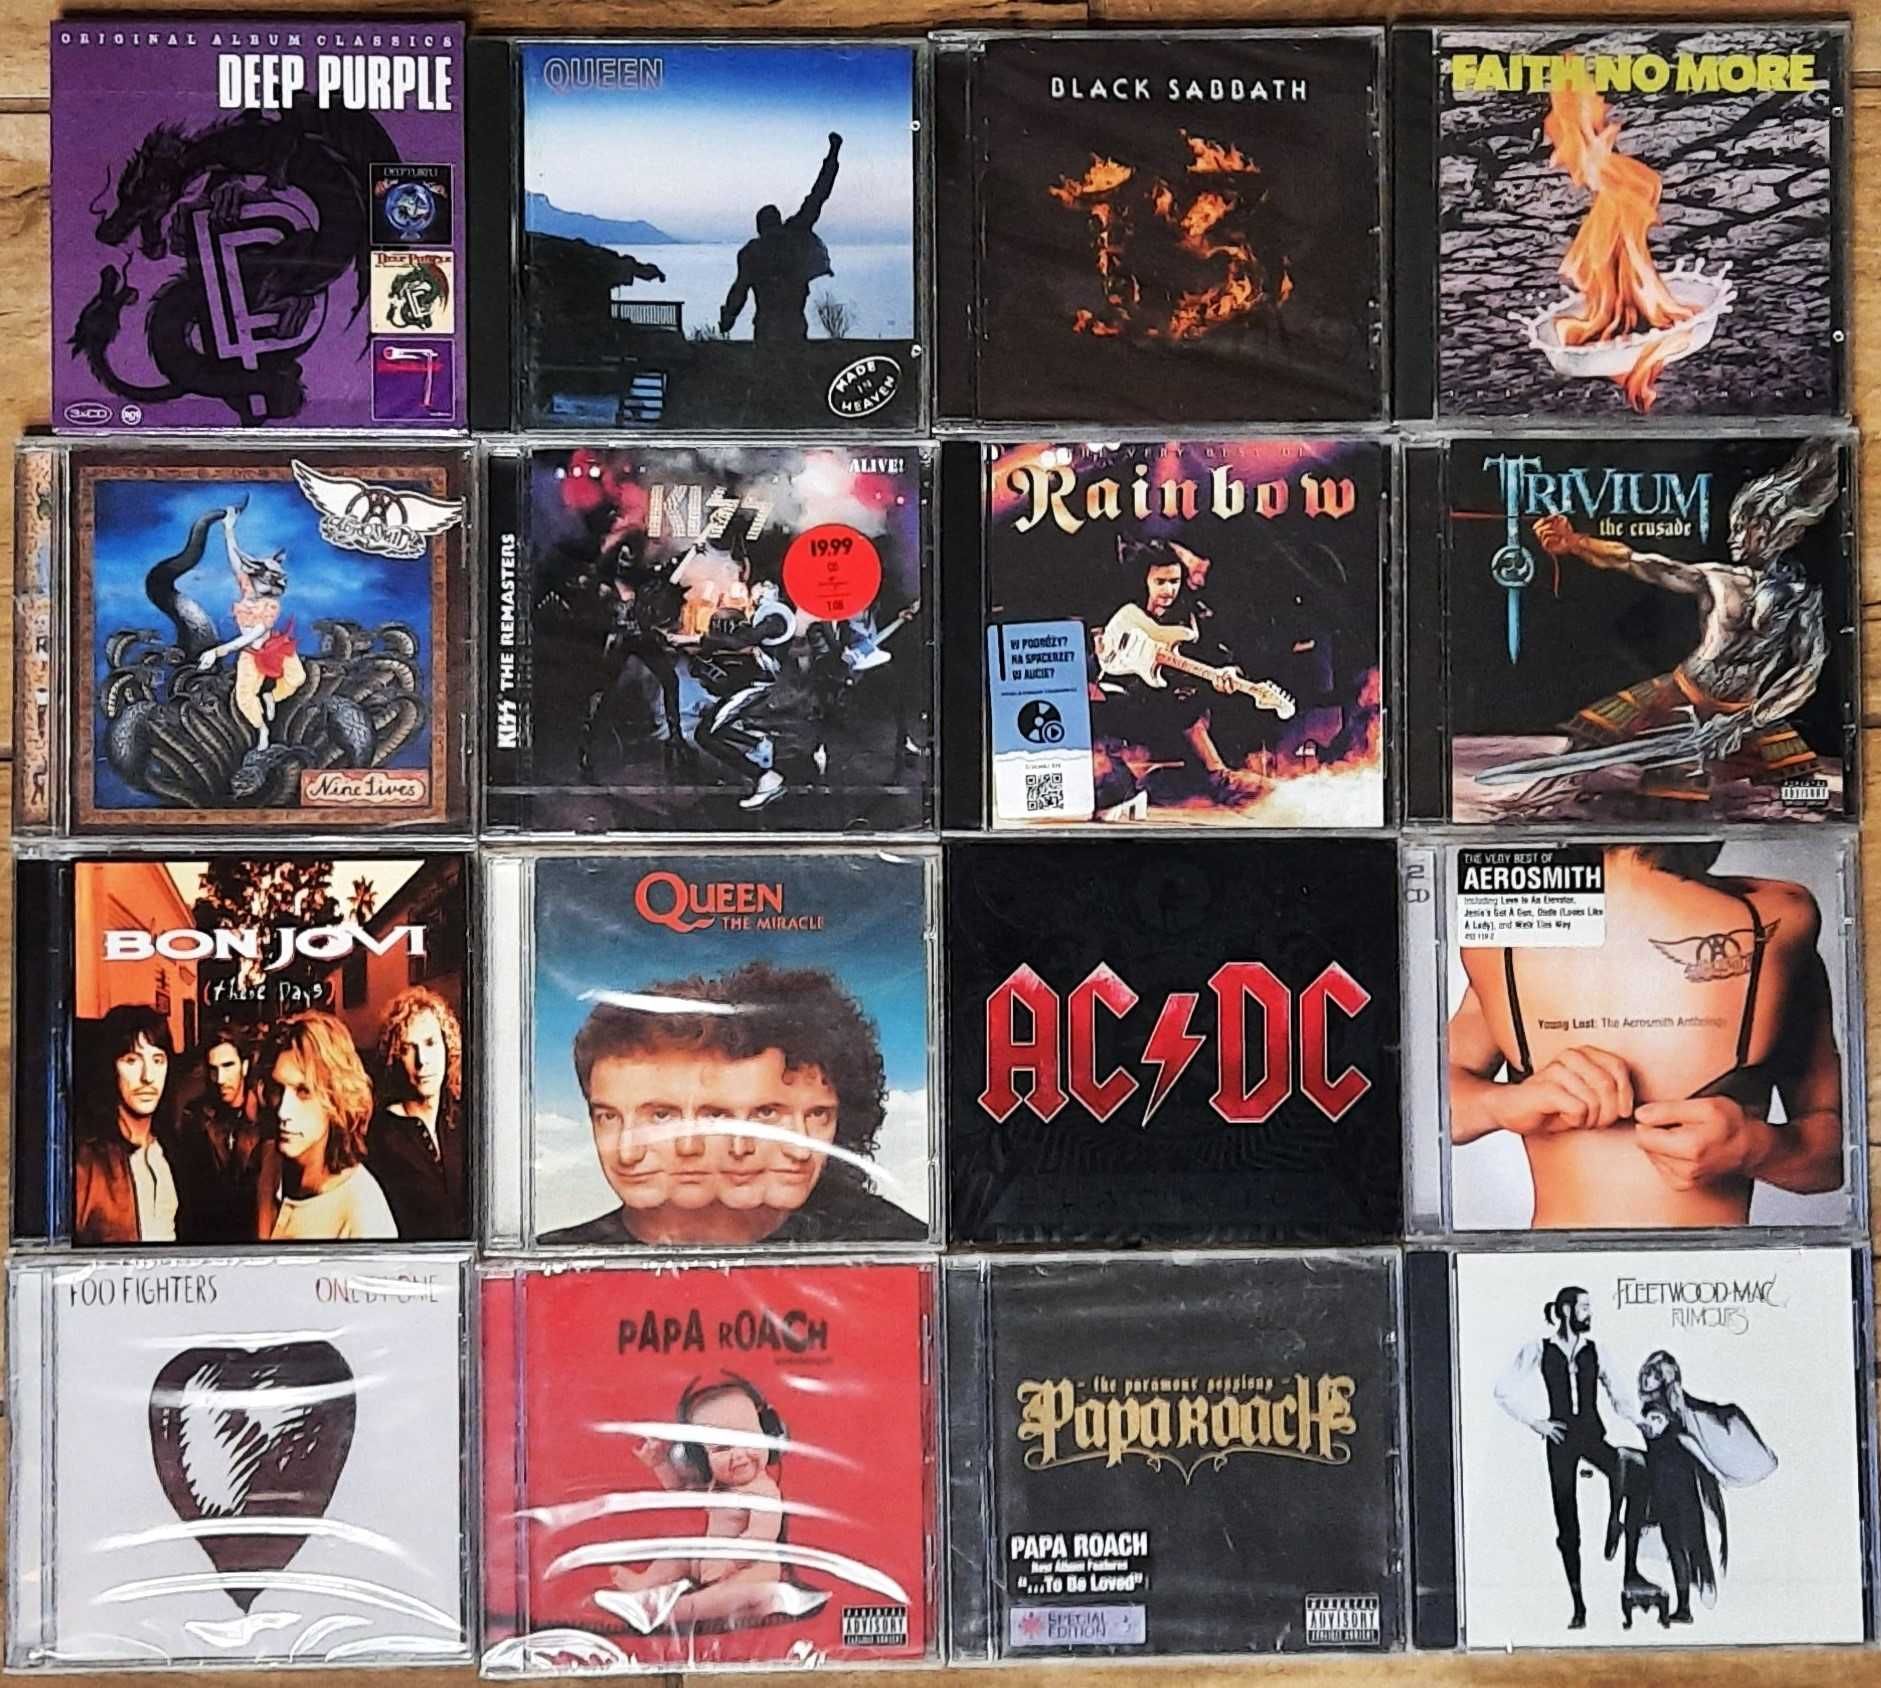 Polecam Kultowy Album CD Legenda Hard Rock-a ZZ TOP - Album XXX